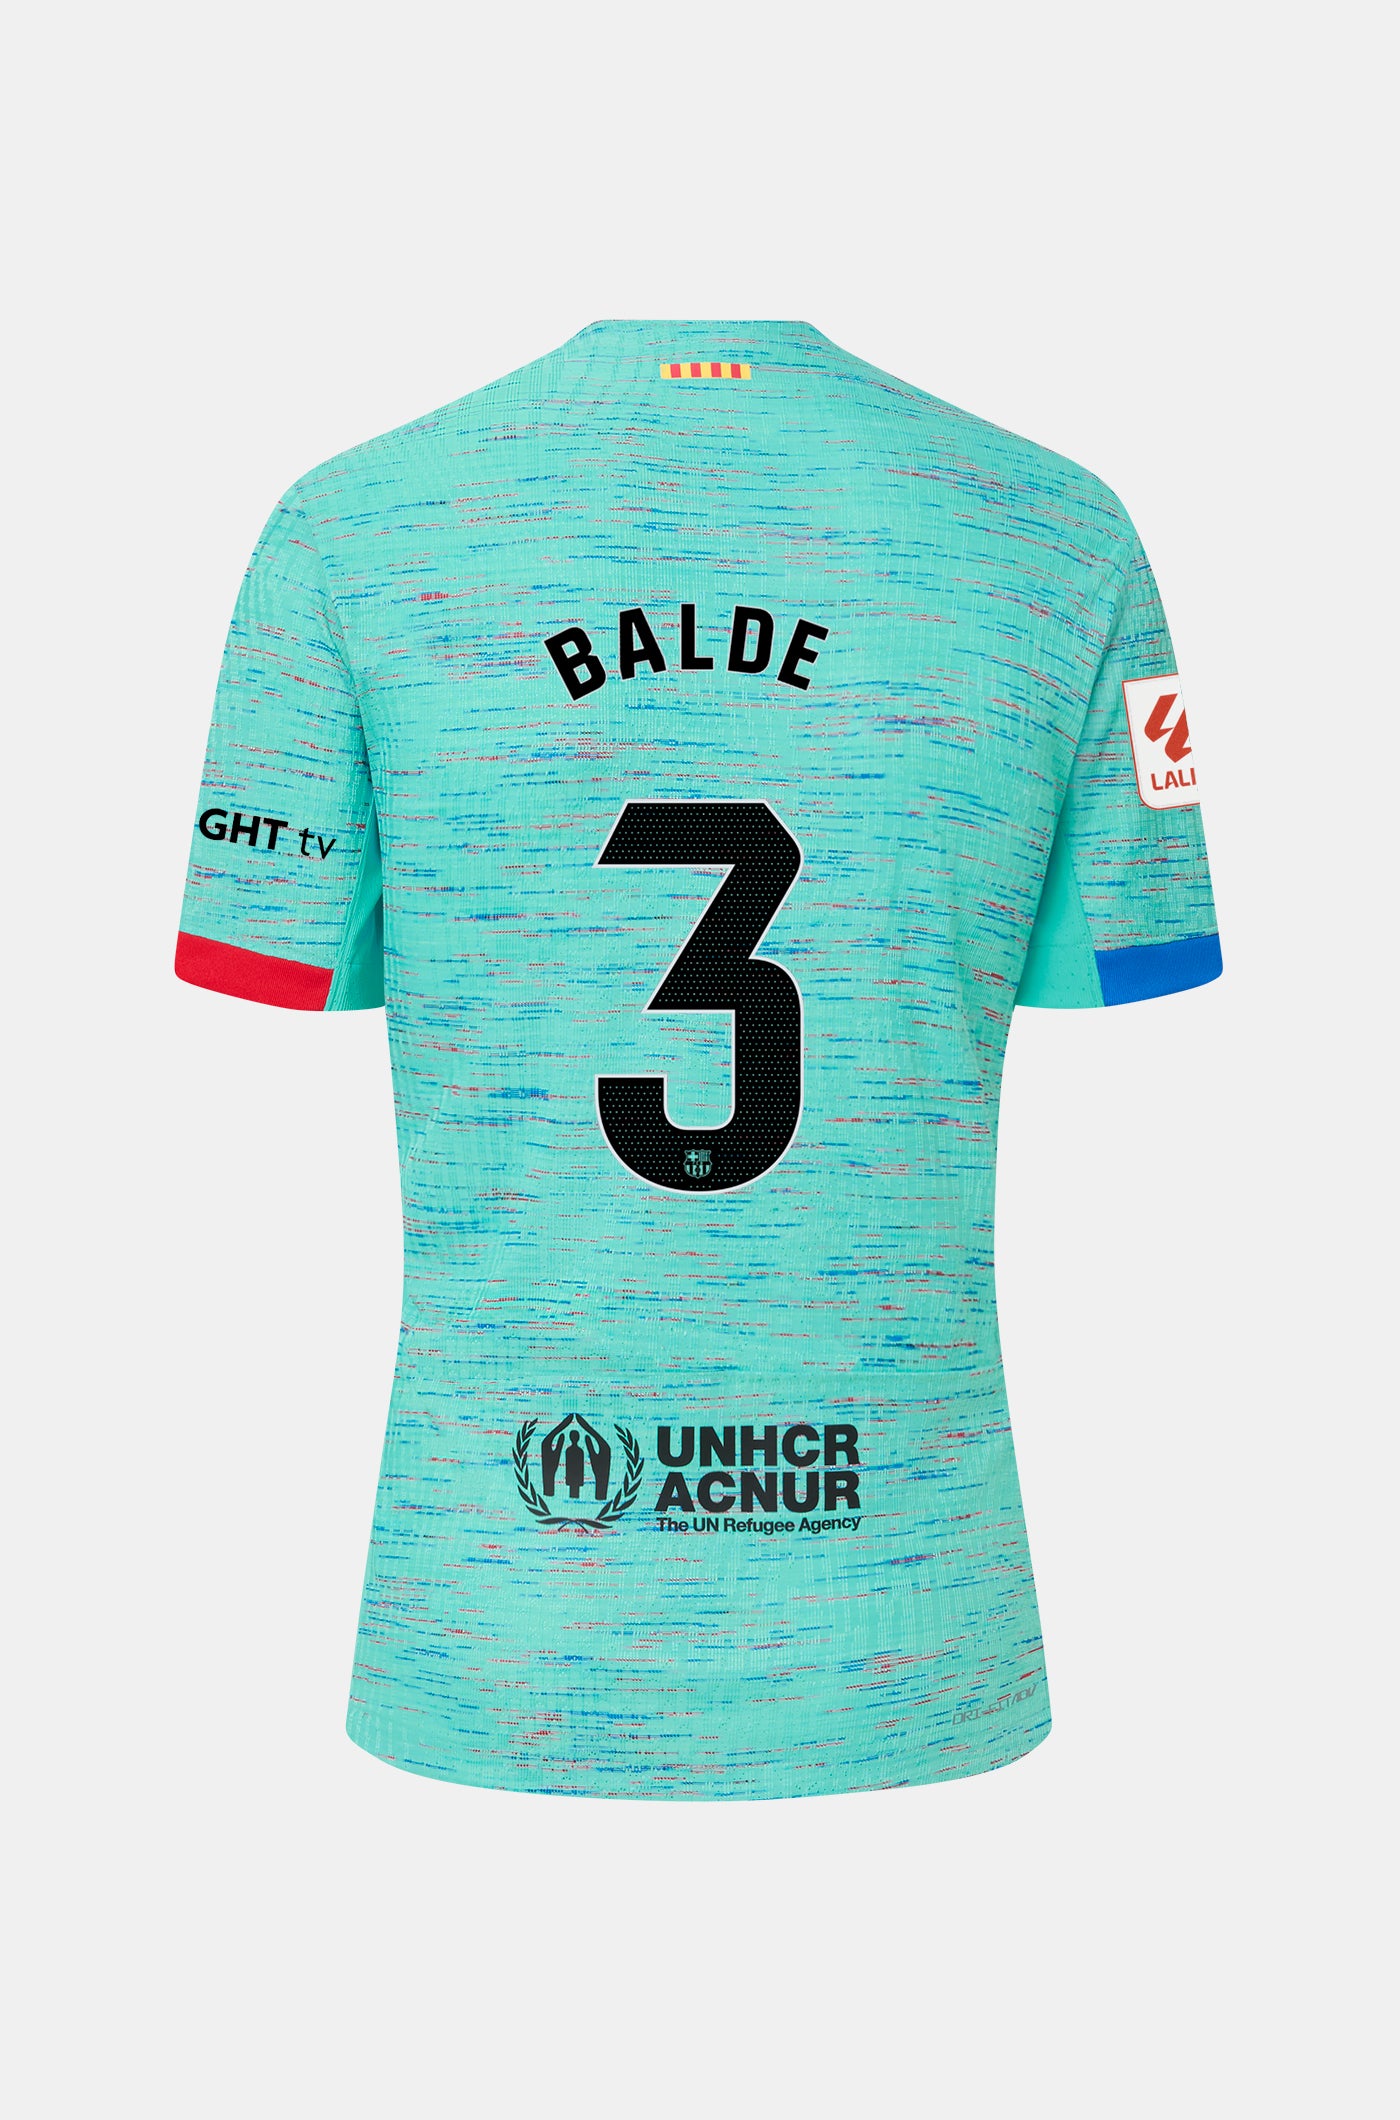 LFP FC Barcelona third shirt 23/24 Player’s Edition  - BALDE